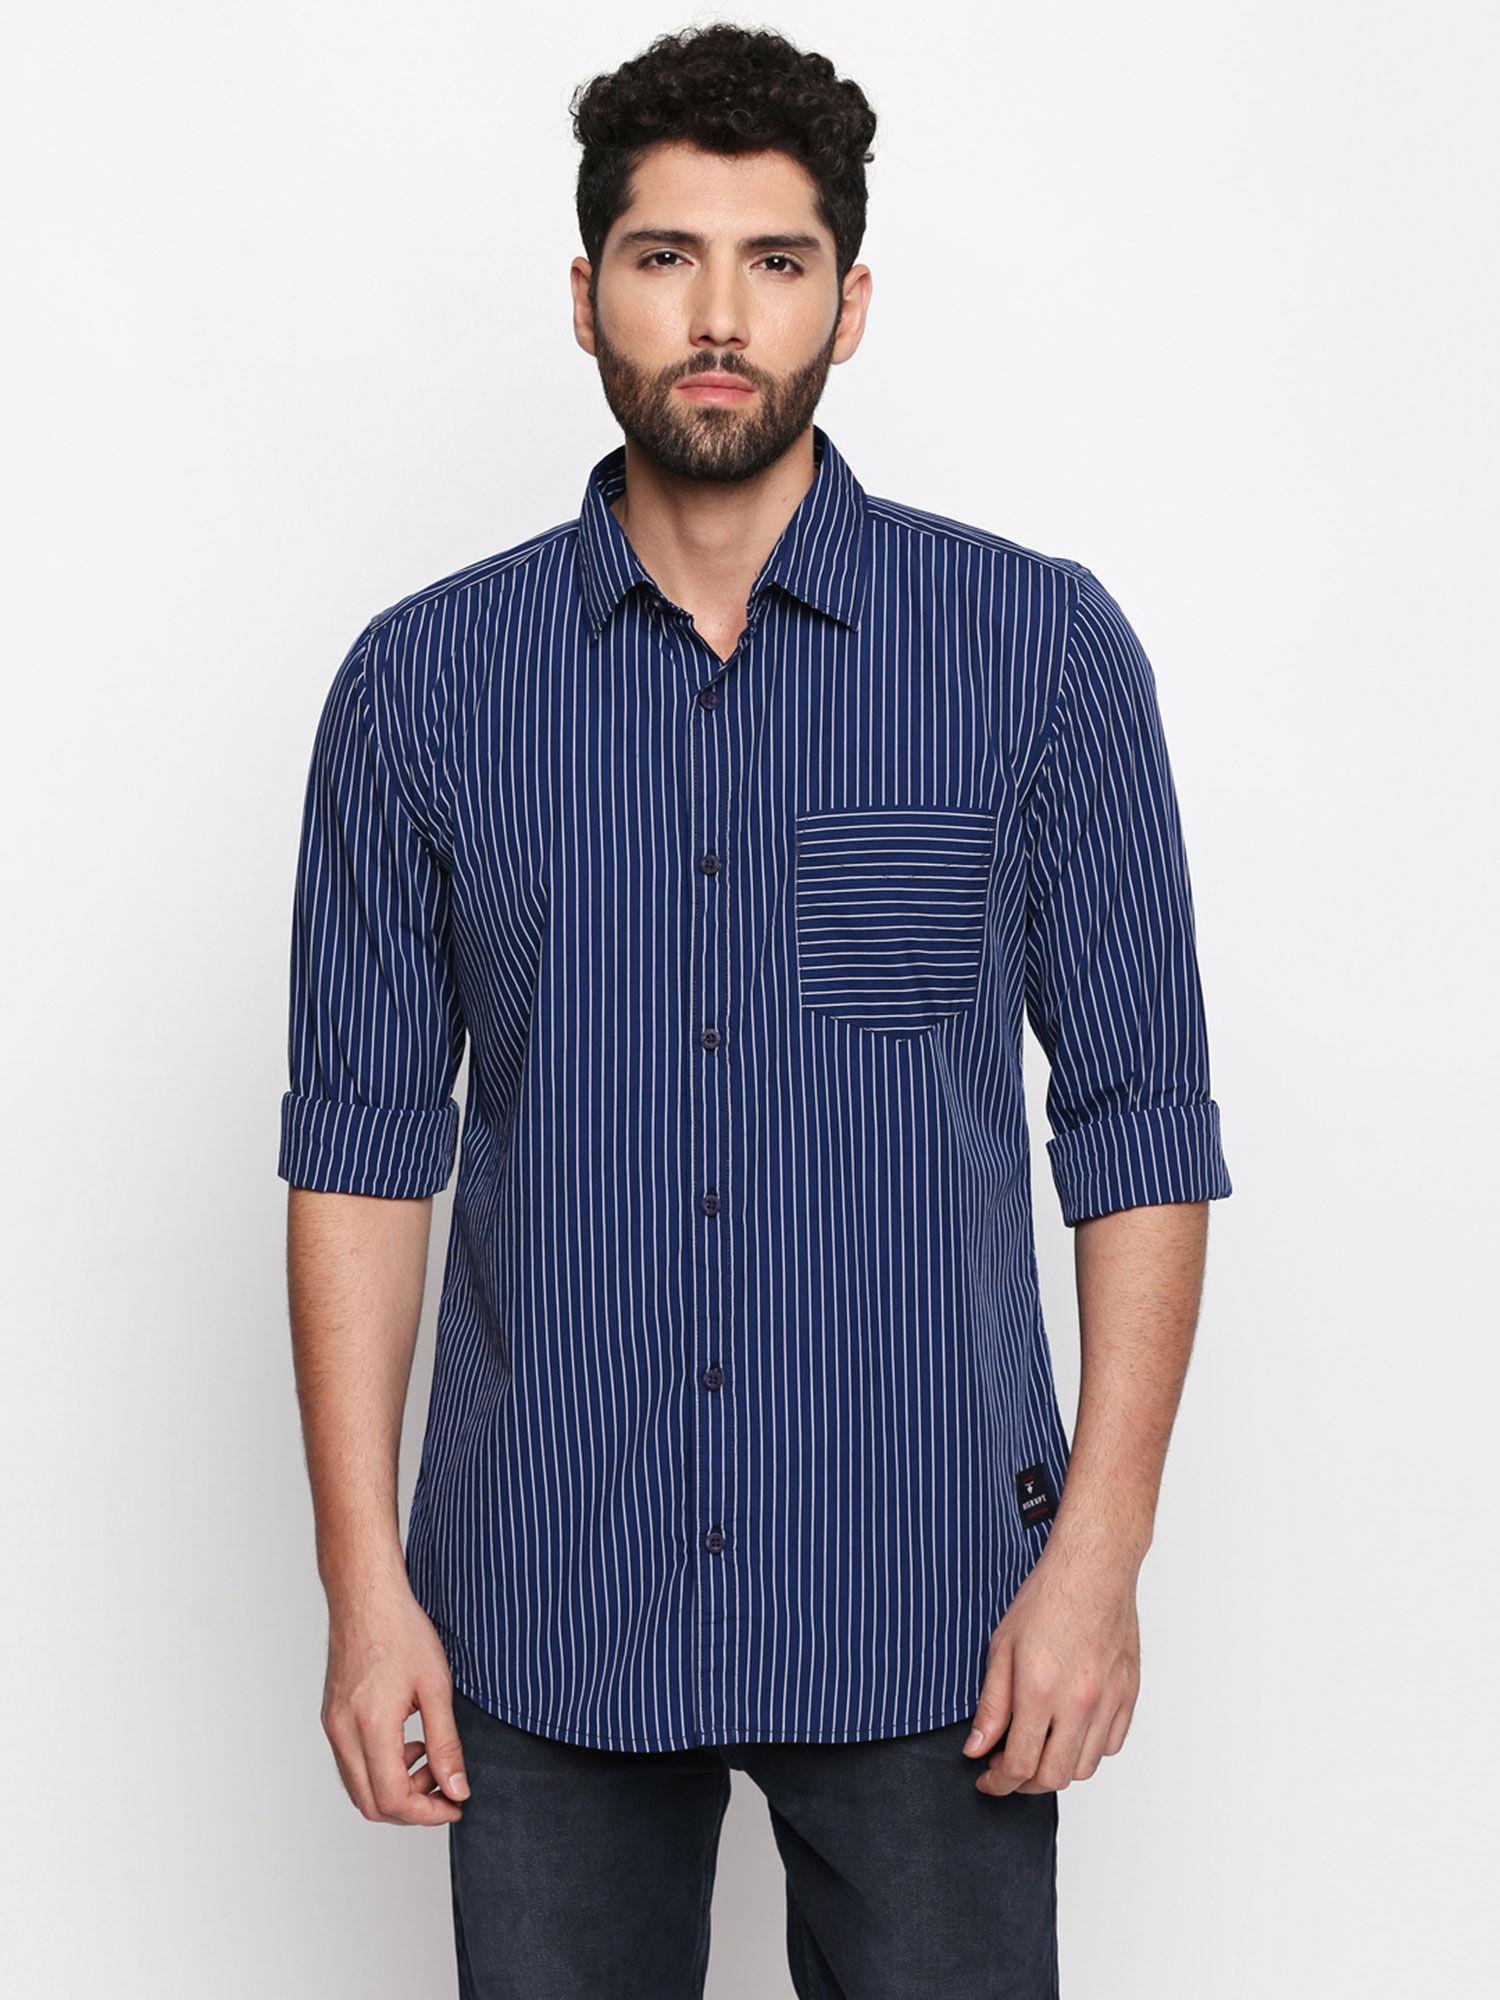 navy-blue cotton fabric full sleeve striped shirt for men